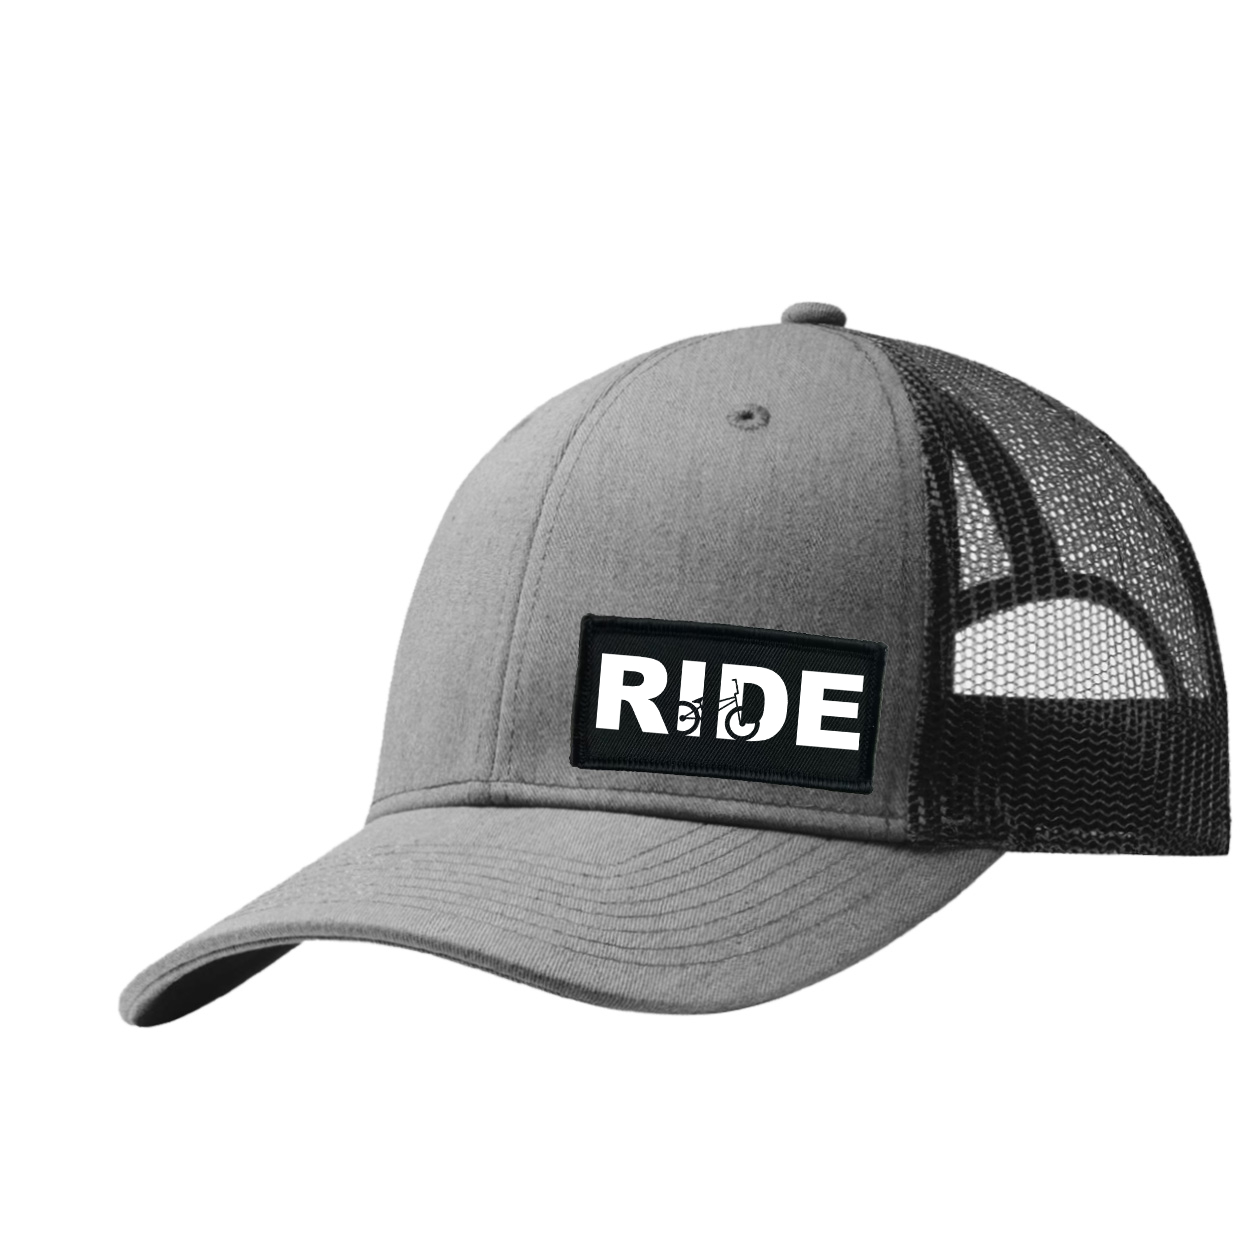 Ride BMX Logo Night Out Woven Patch Snapback Trucker Hat Heather Gray/Black (White Logo)